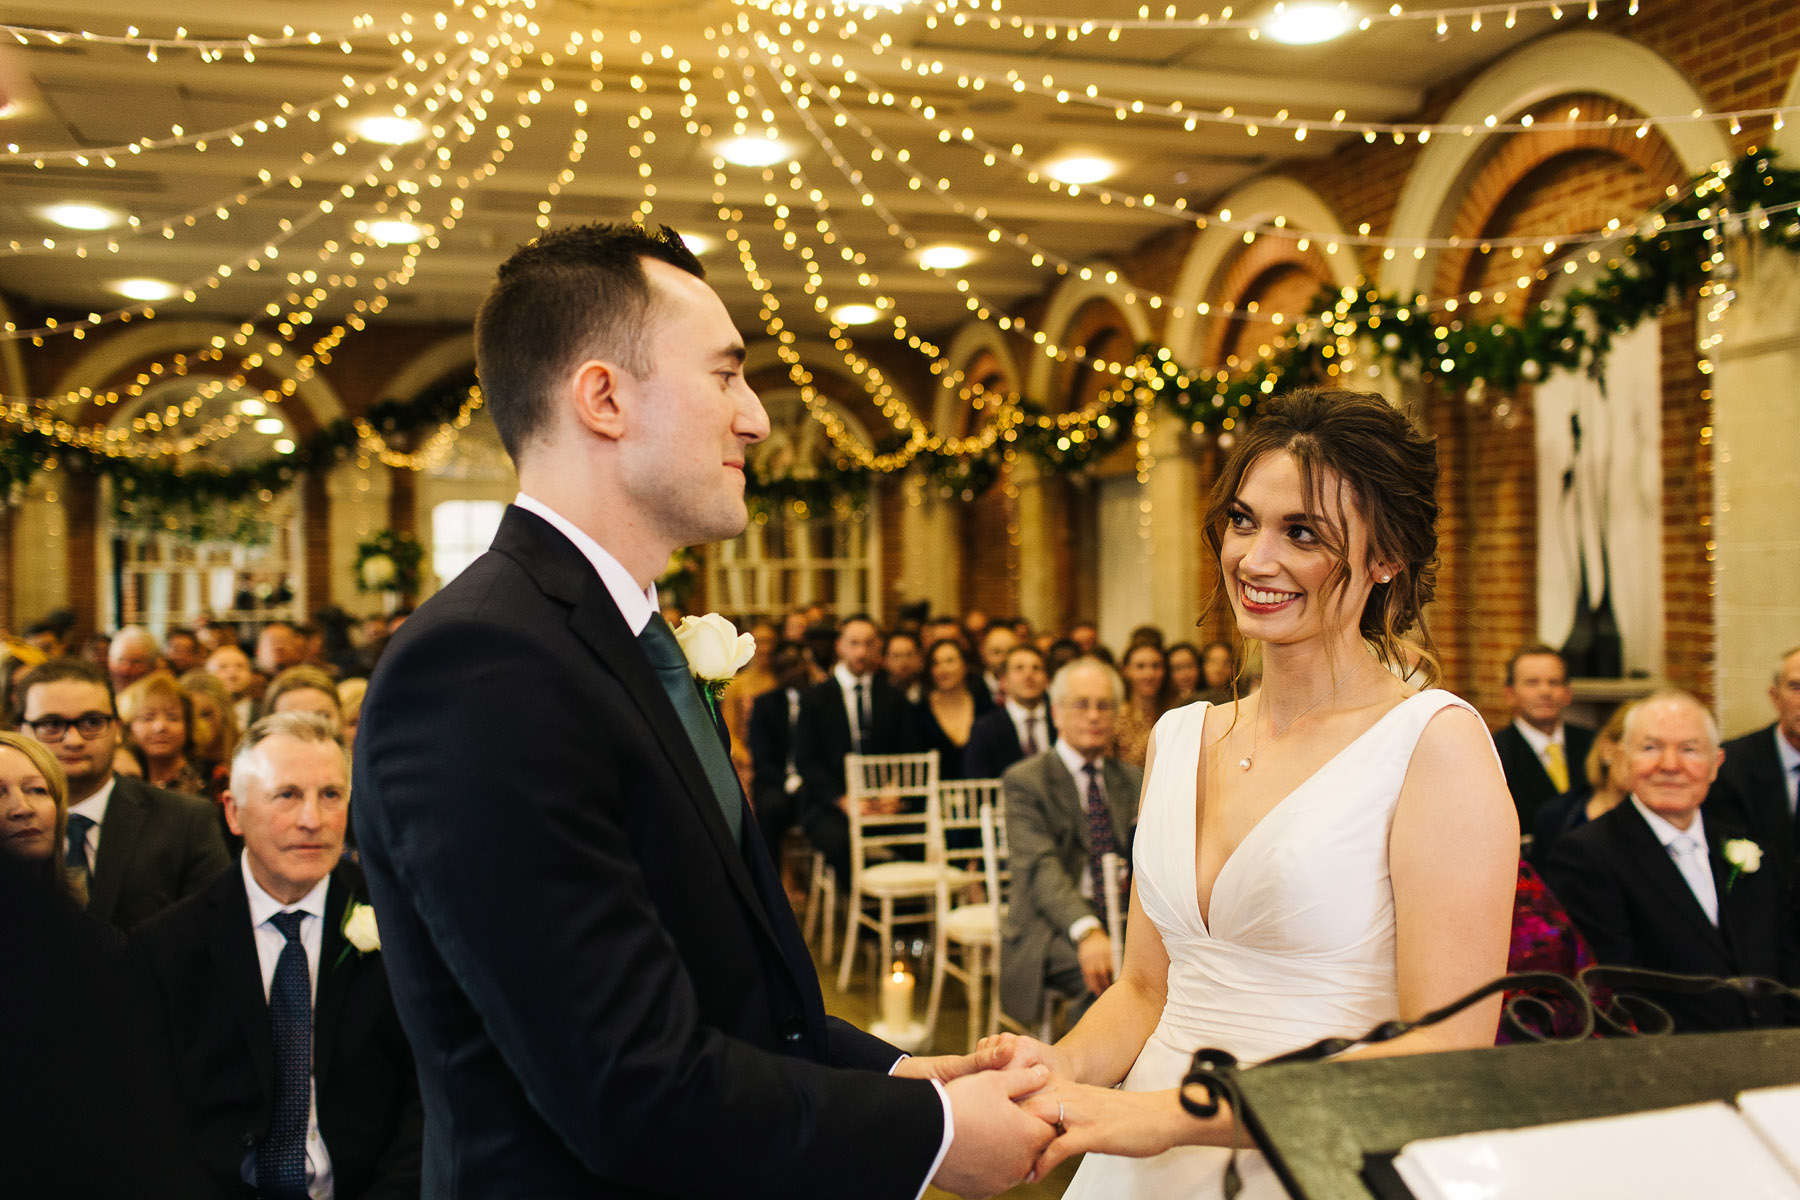 Civil Ceremont in a grand wedding venue in Surrey